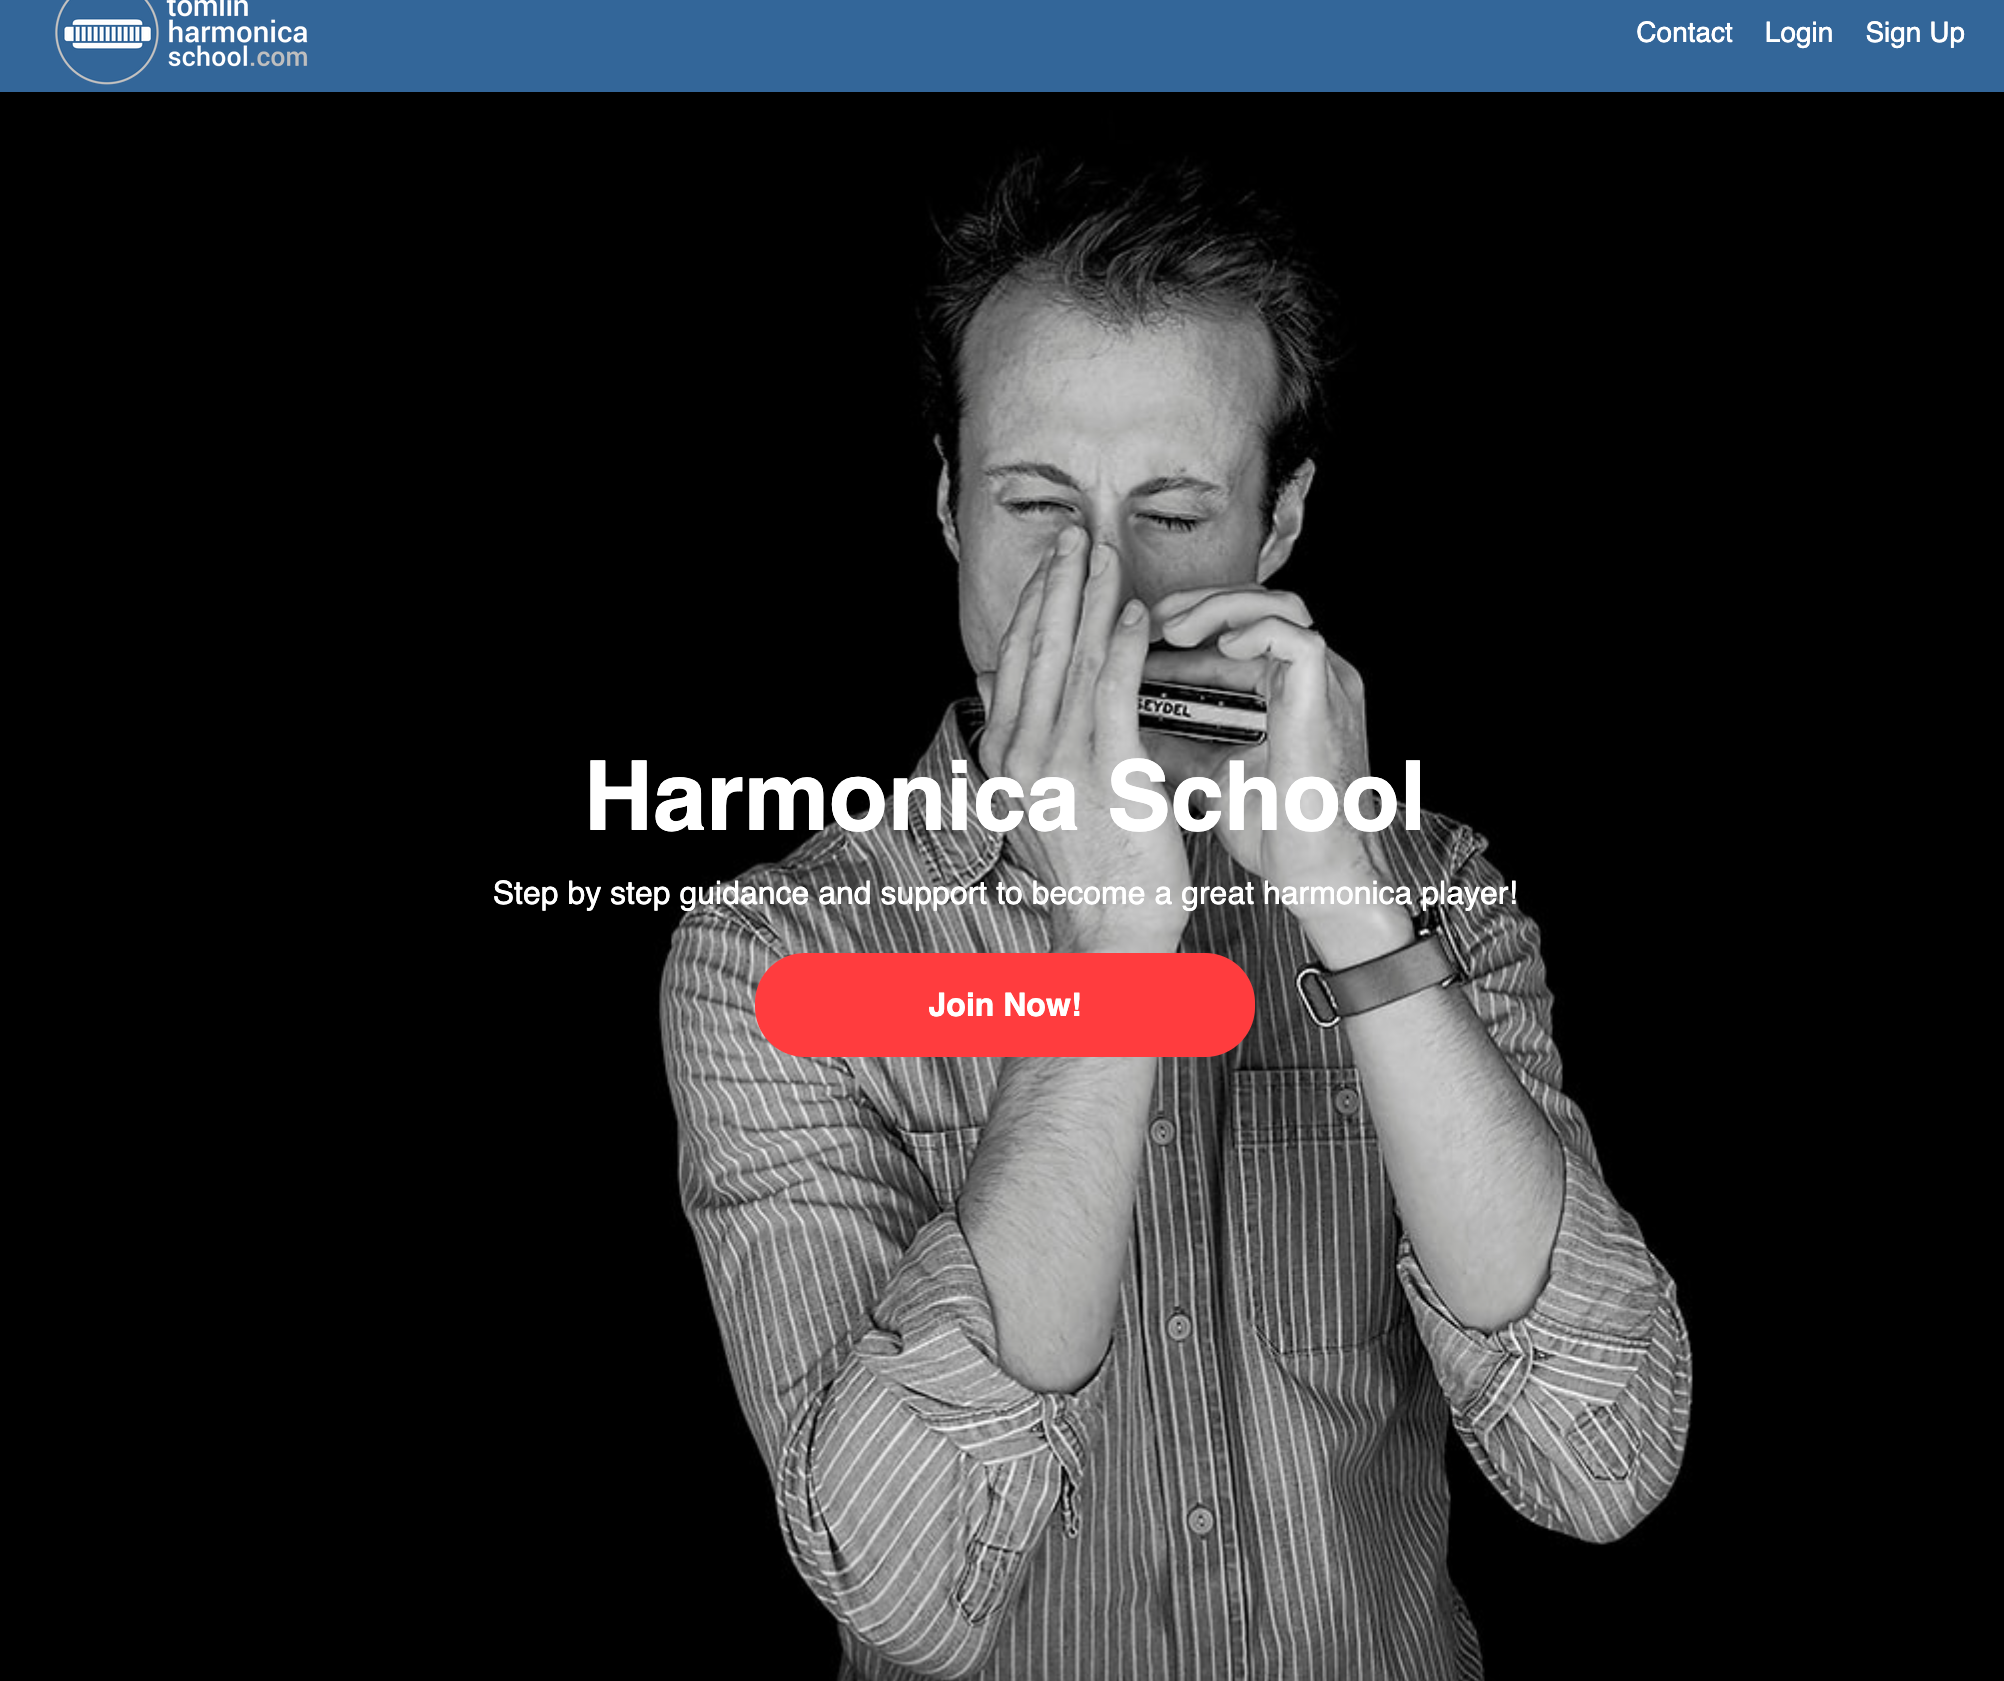 Harmonica School - Tomlinharmonicaschool.com